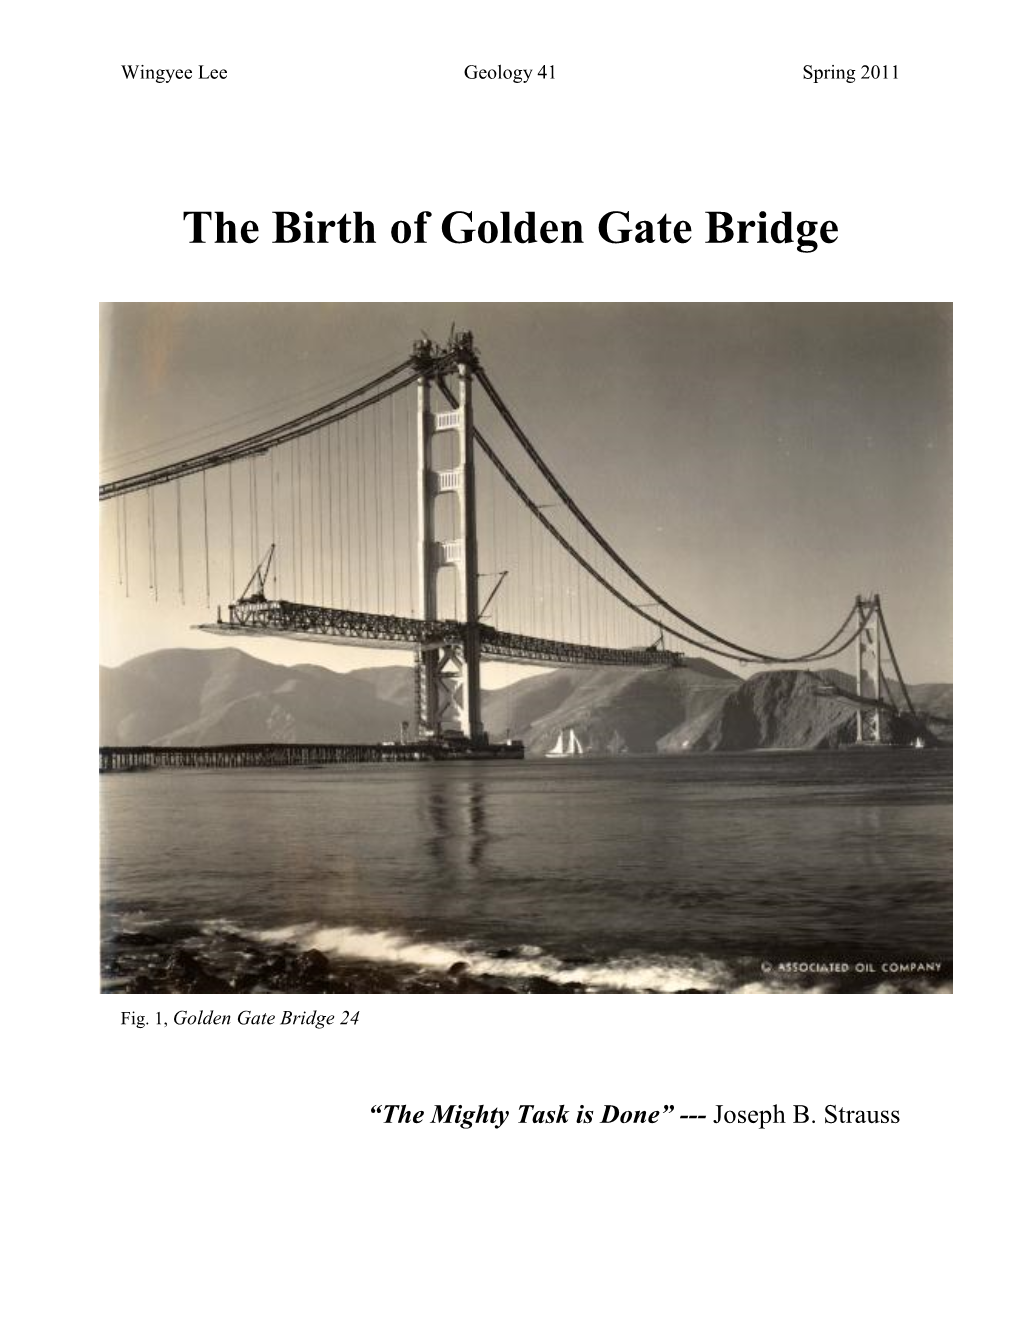 The Birth of Golden Gate Bridge